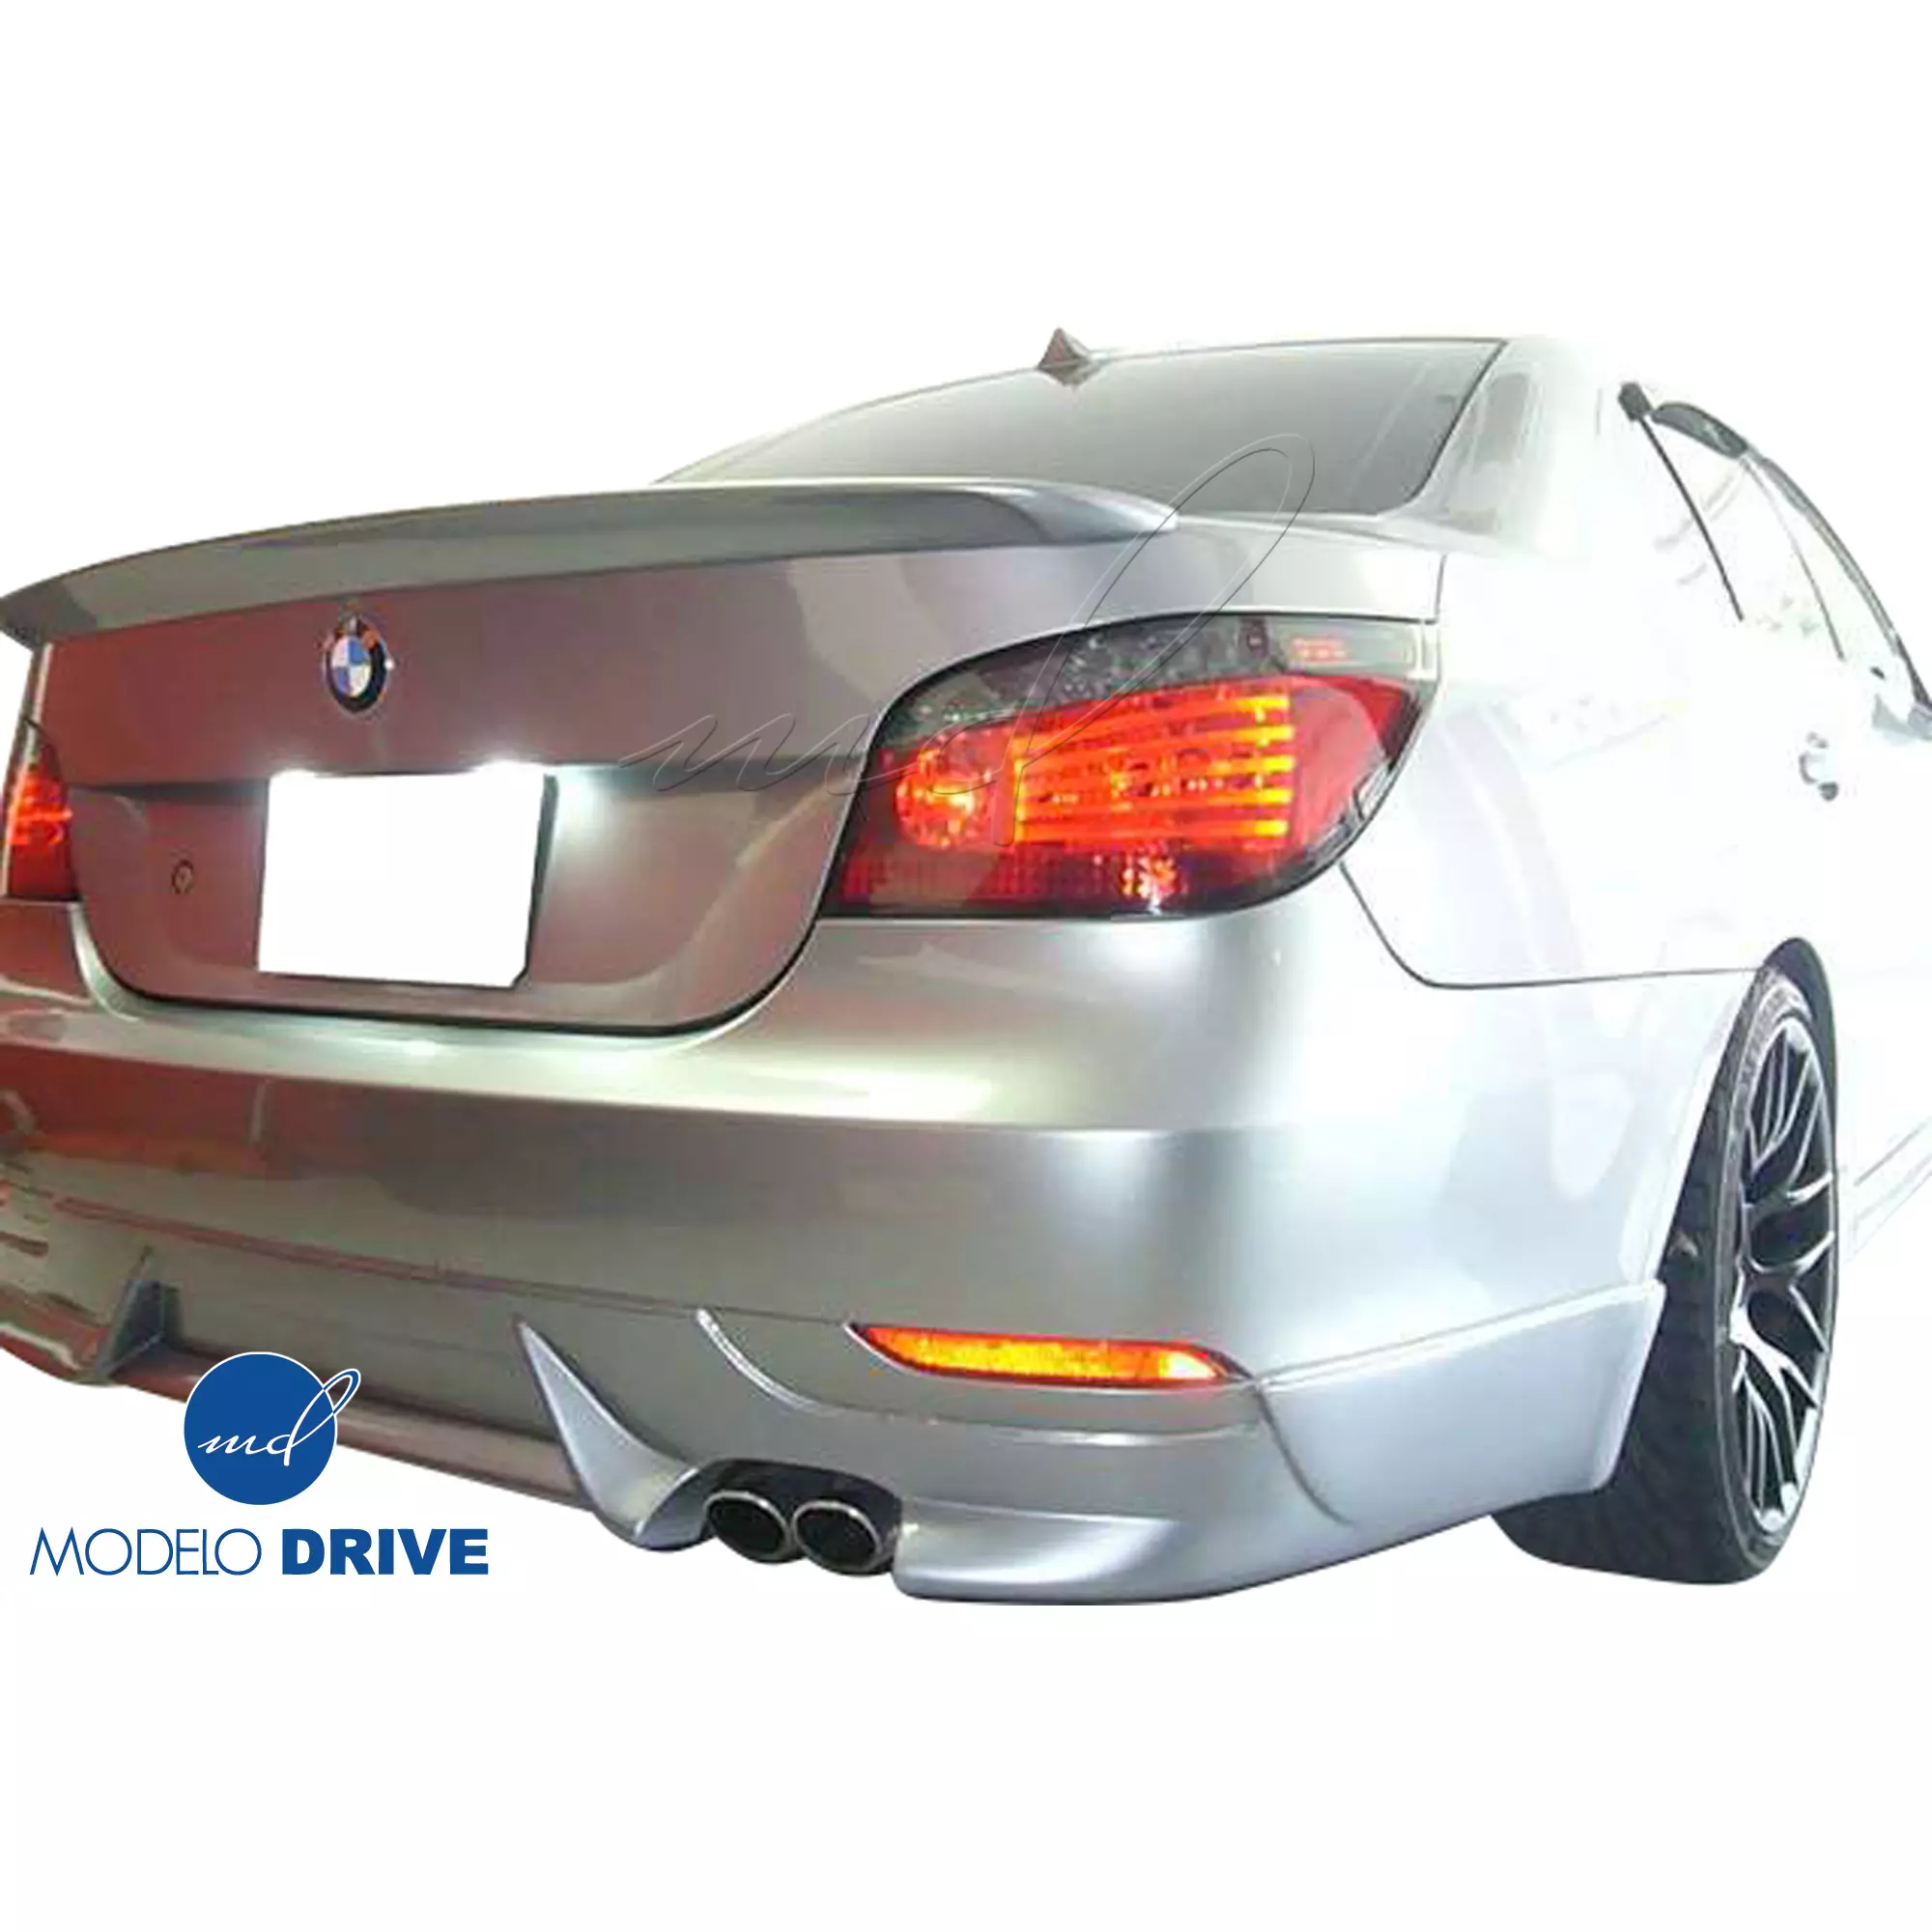 ModeloDrive FRP ASCH Rear Valance Add-on > BMW 5-Series E60 2004-2010 > 4dr - Image 2